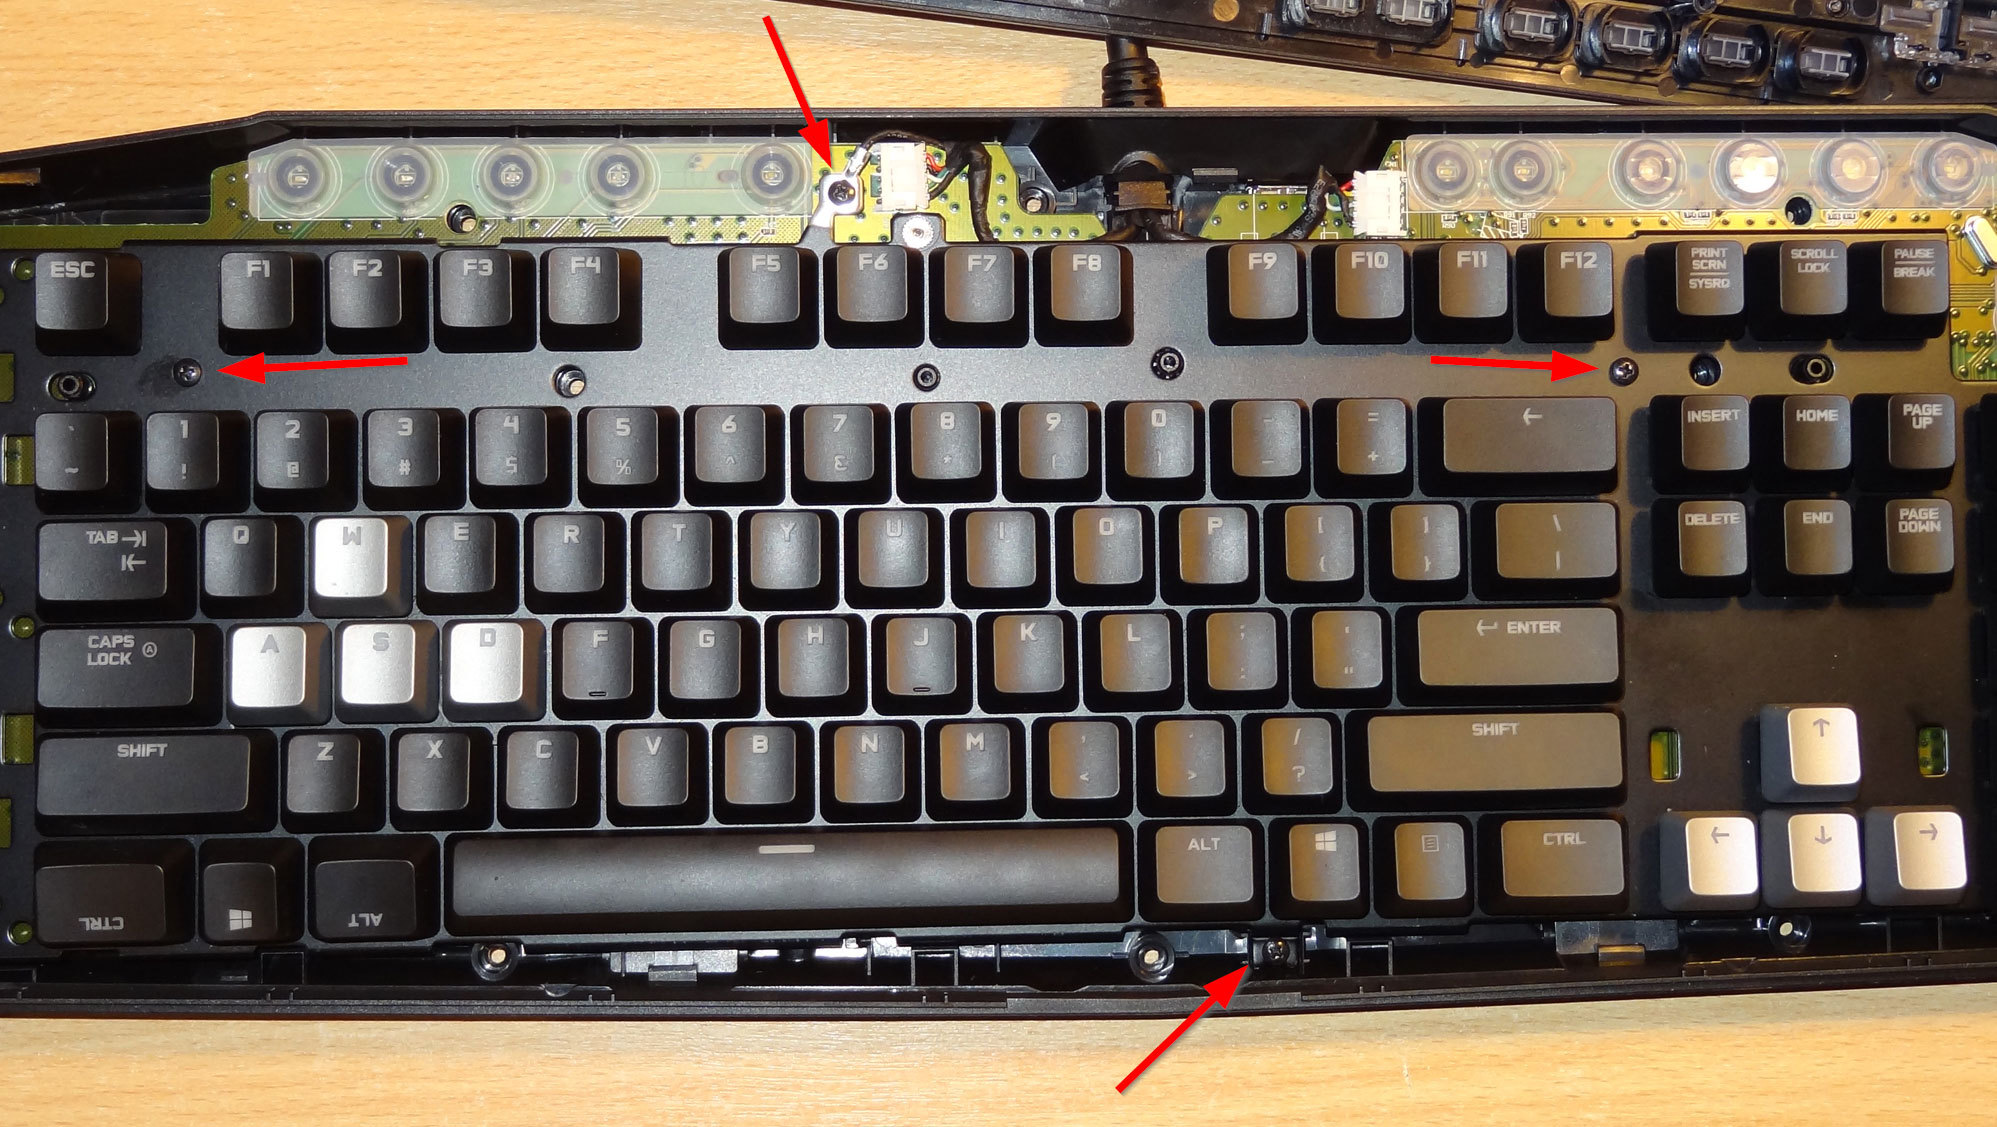 How do you troubleshoot a Logitech keyboard?